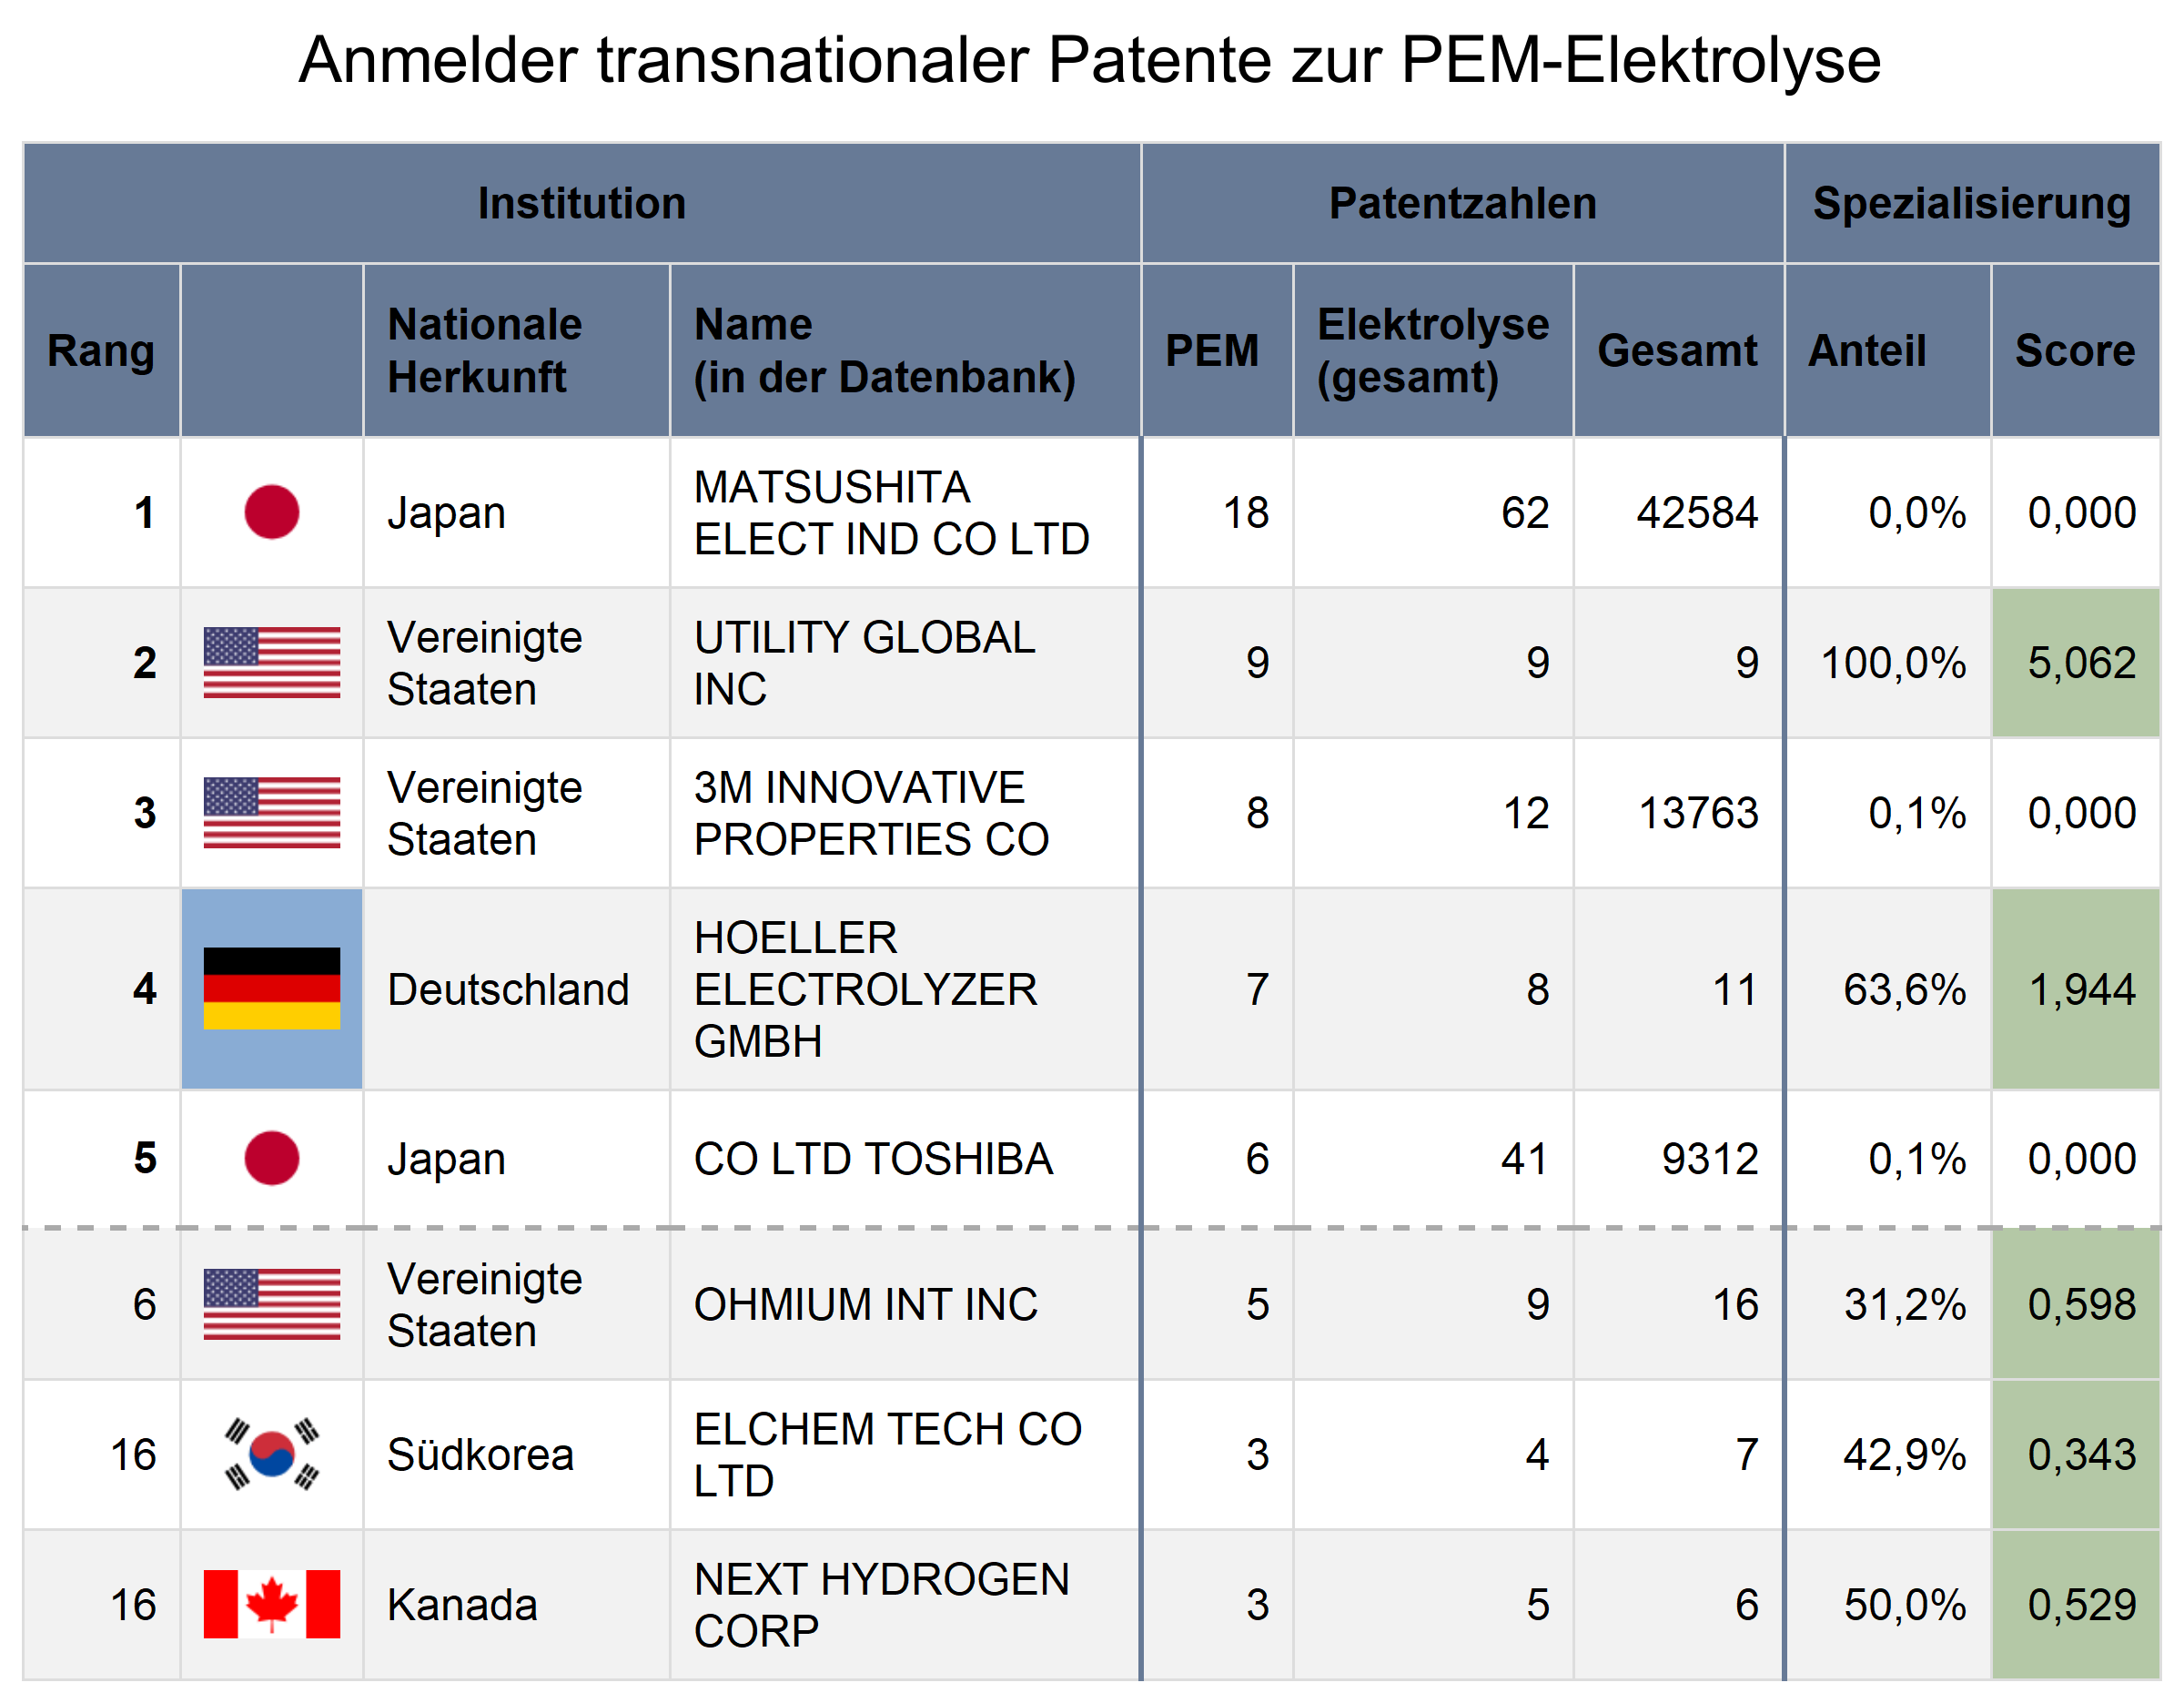 Anmelder transnationaler Patente zur PEM-Elektrolyse